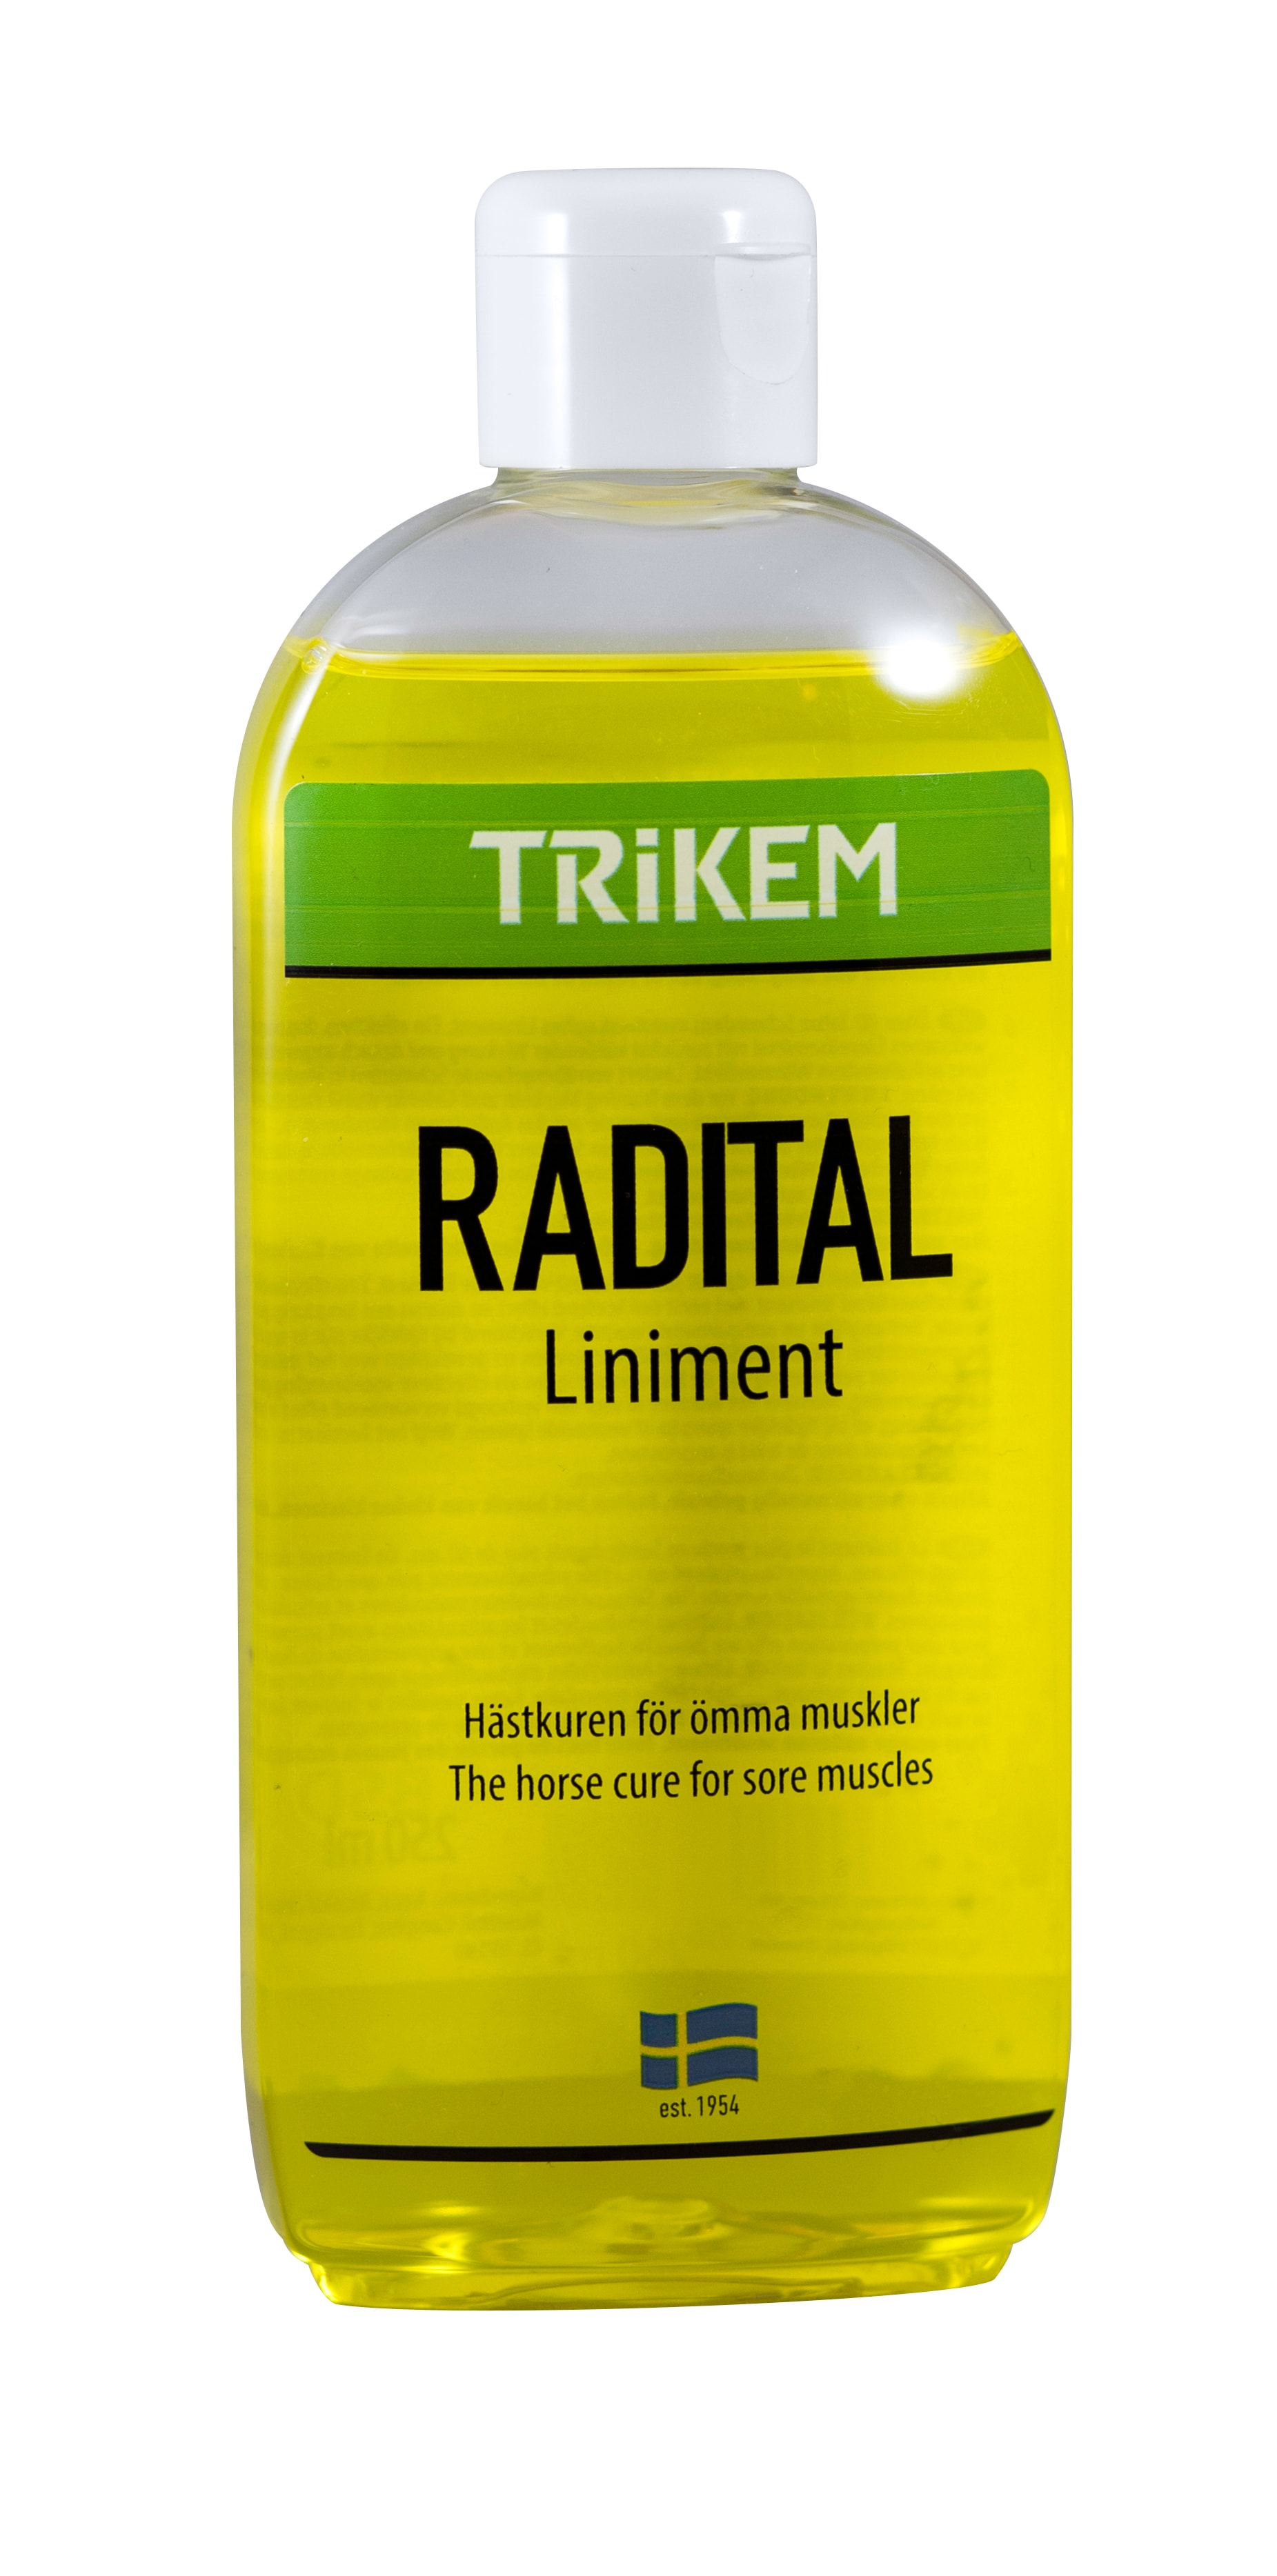 radital-liniment-trikem